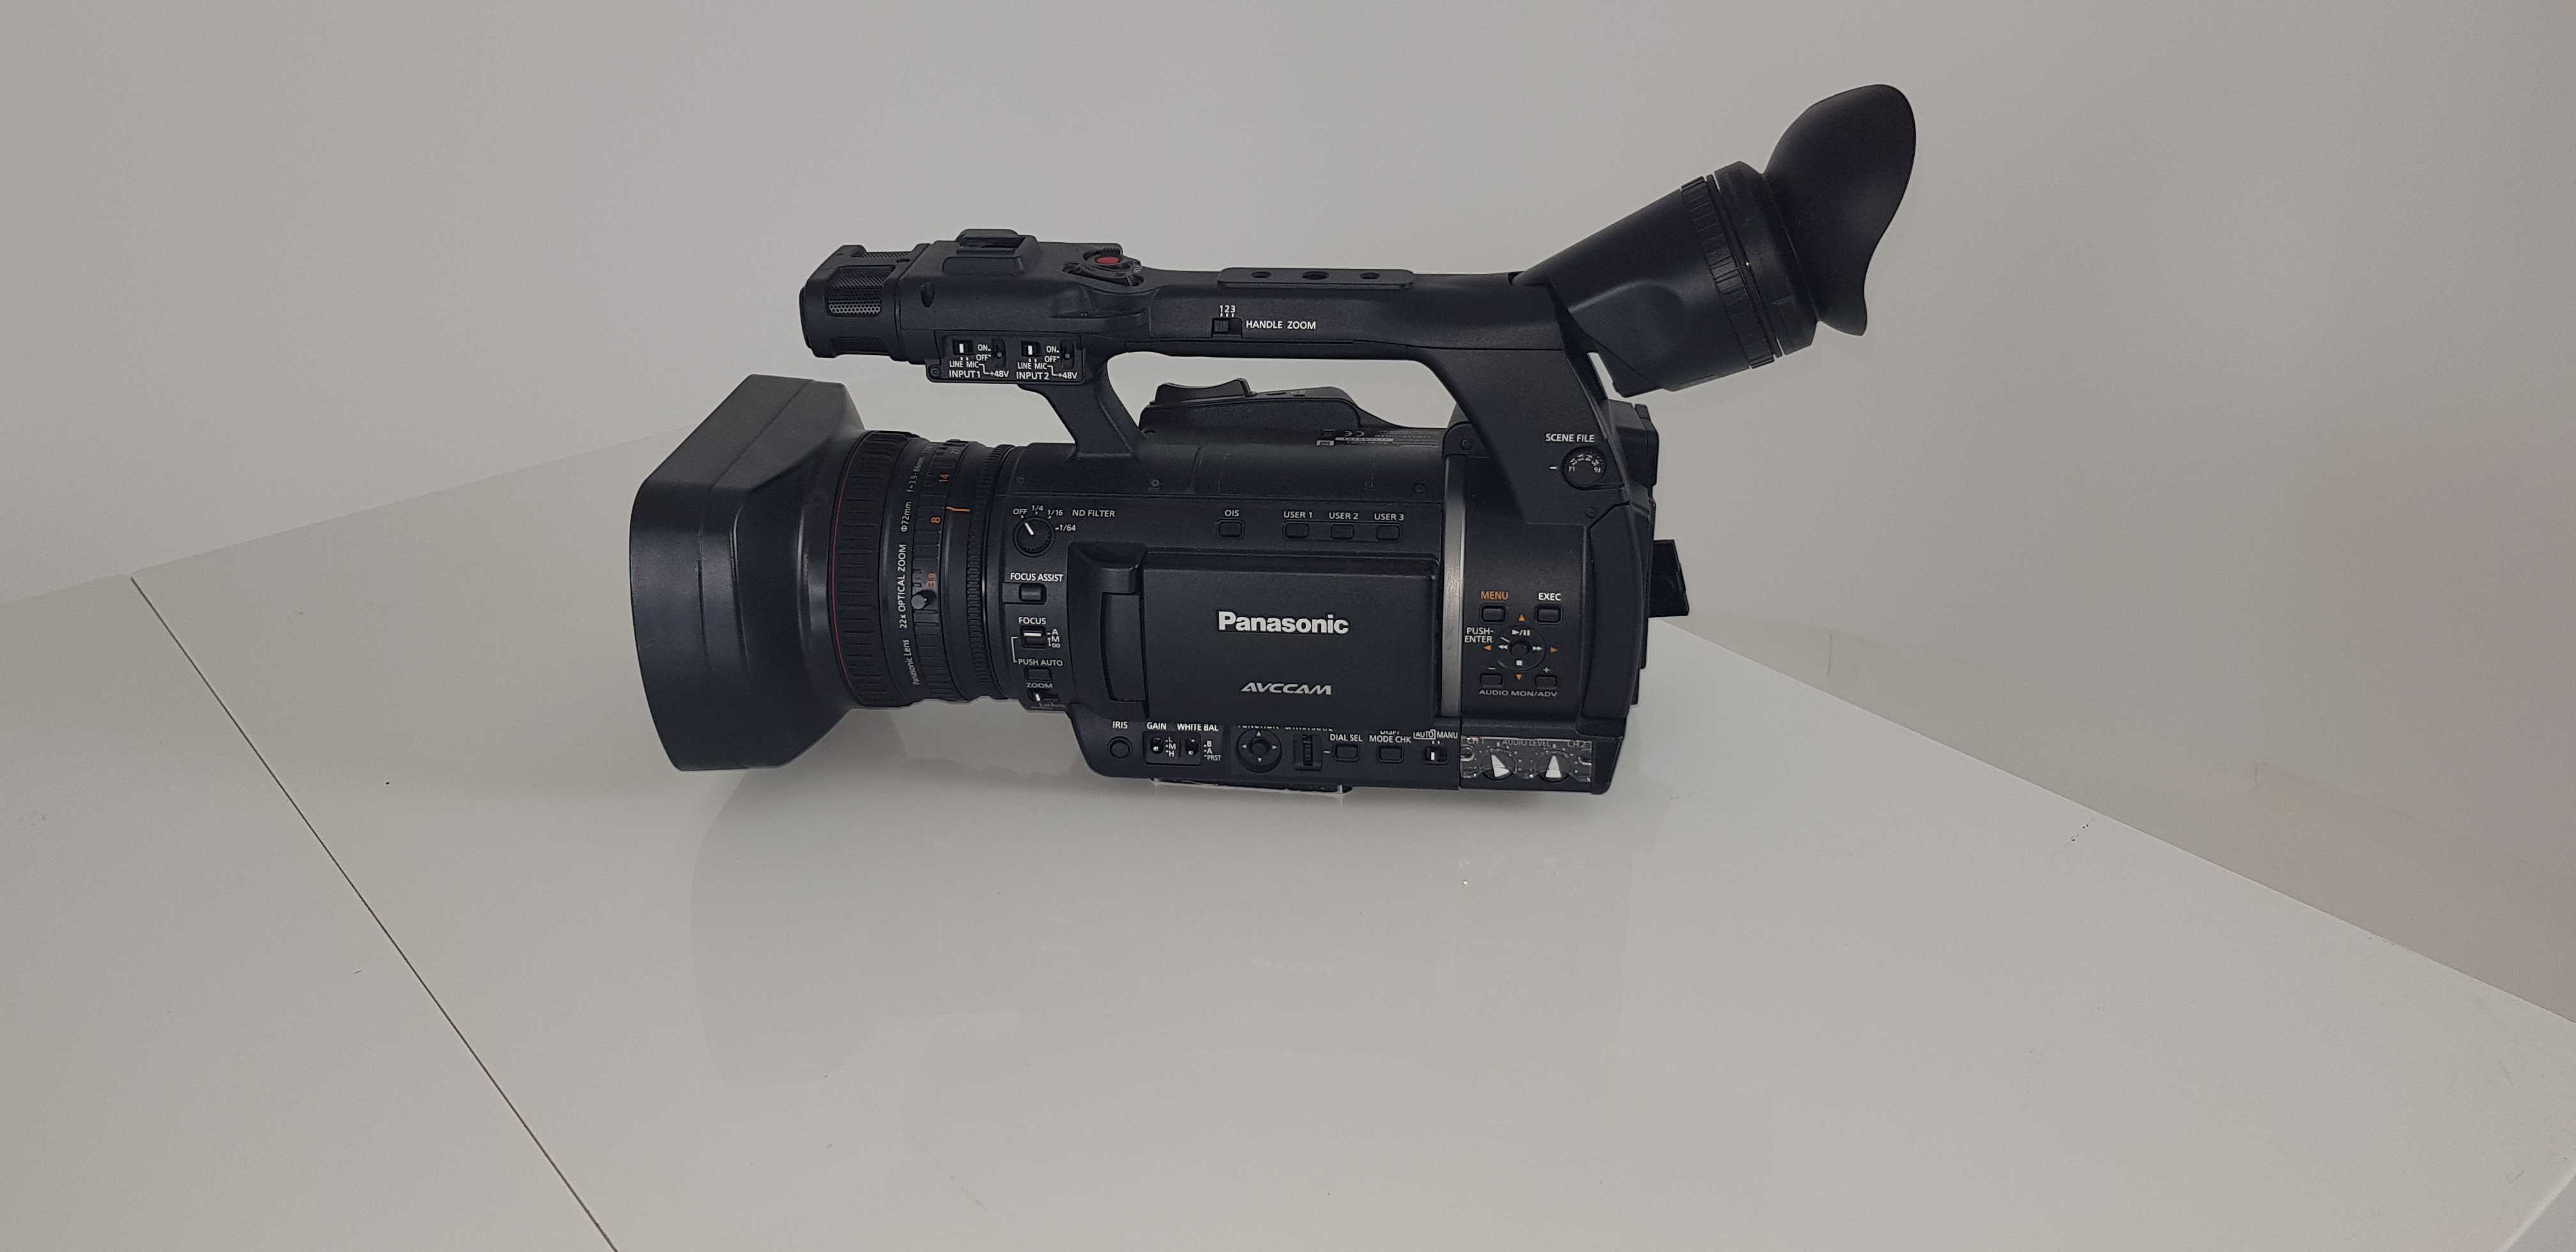 Видеокамера panasonic ag-hpx174